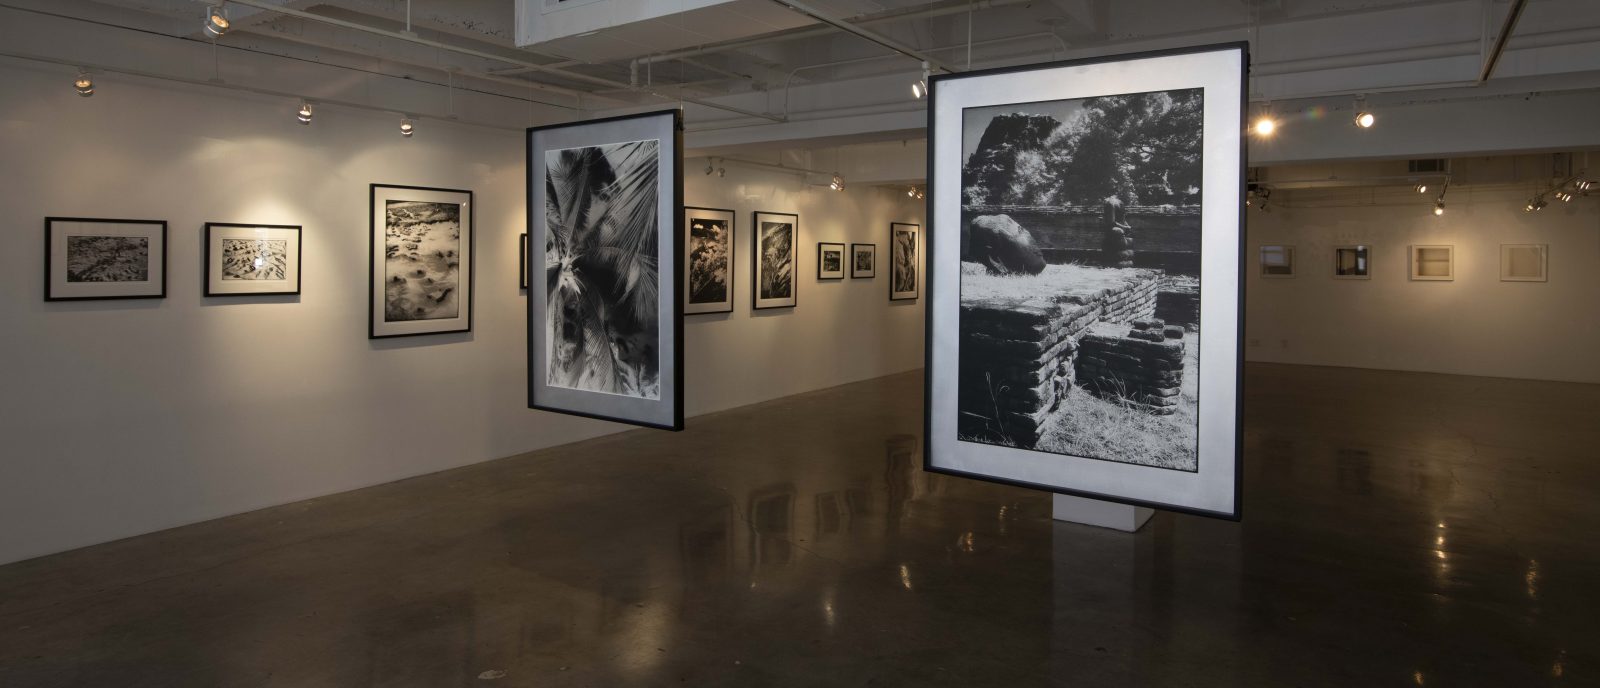 Nan Rae Gallery Presents Sentience: Photographs by Edward Alfano and Lesley Krane